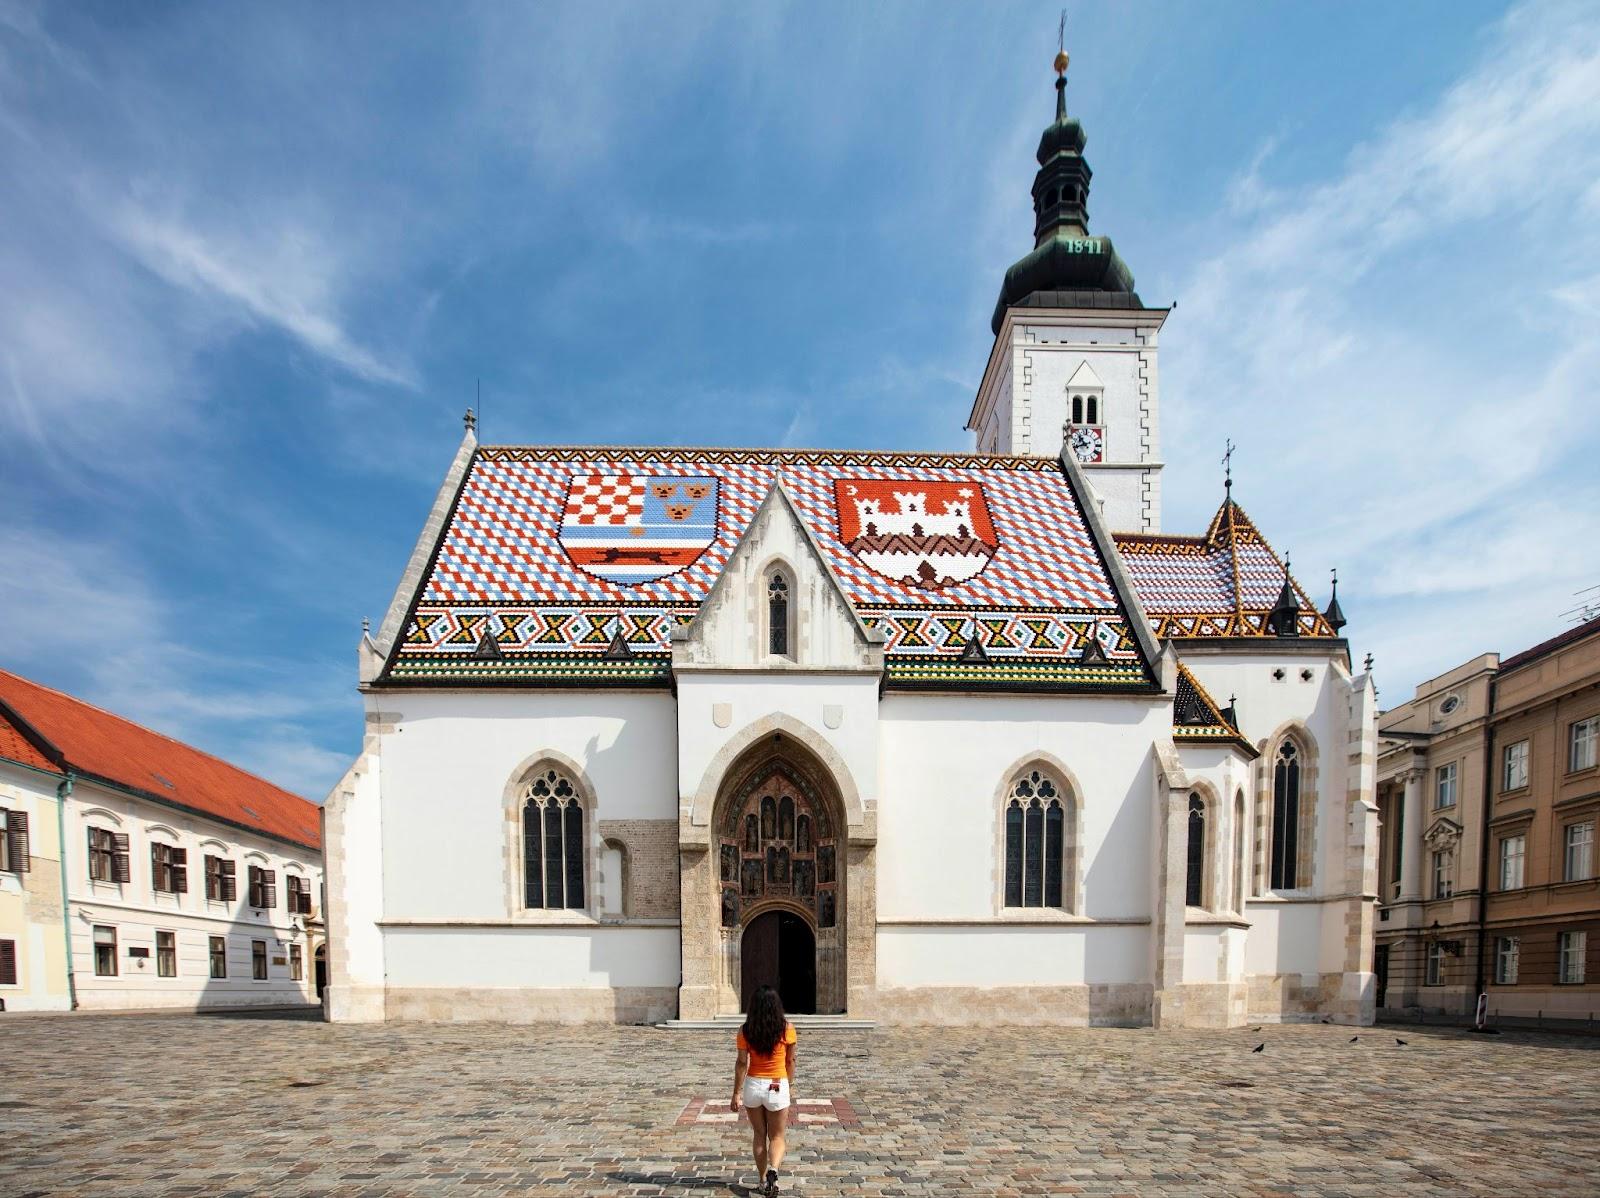 St marks church in zagreb Croatia